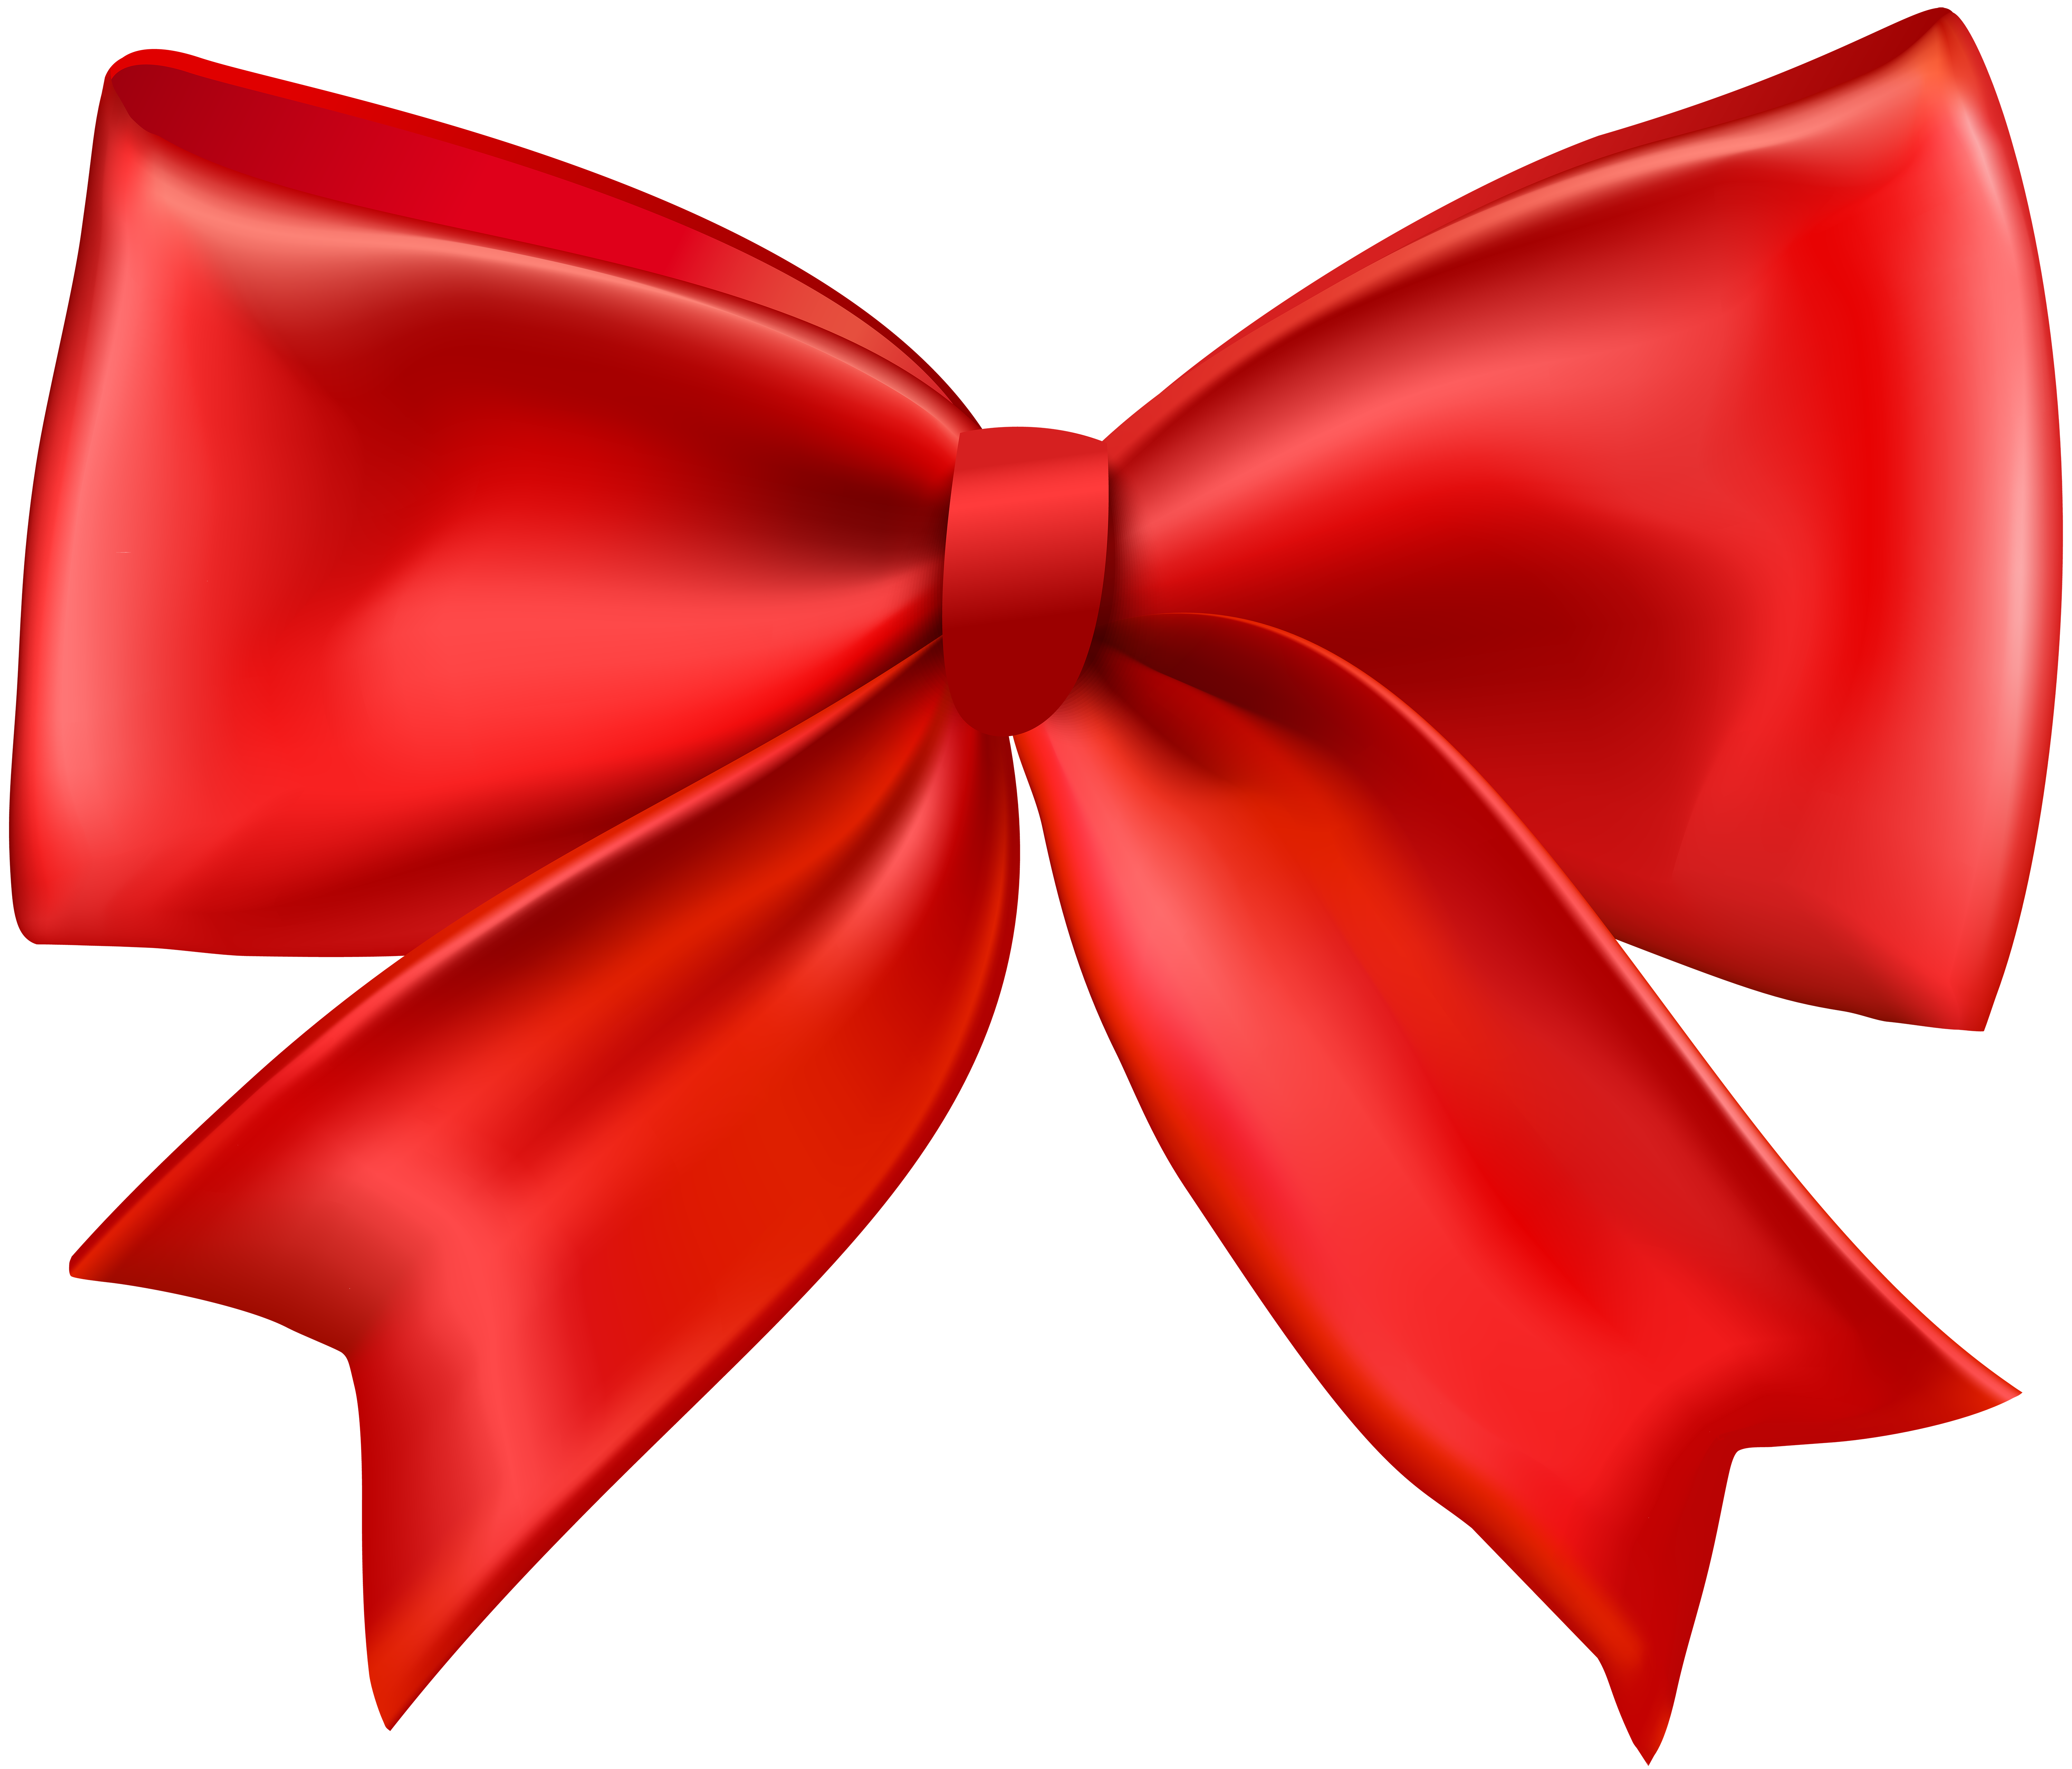 red gift ribbon PNG image transparent image download, size